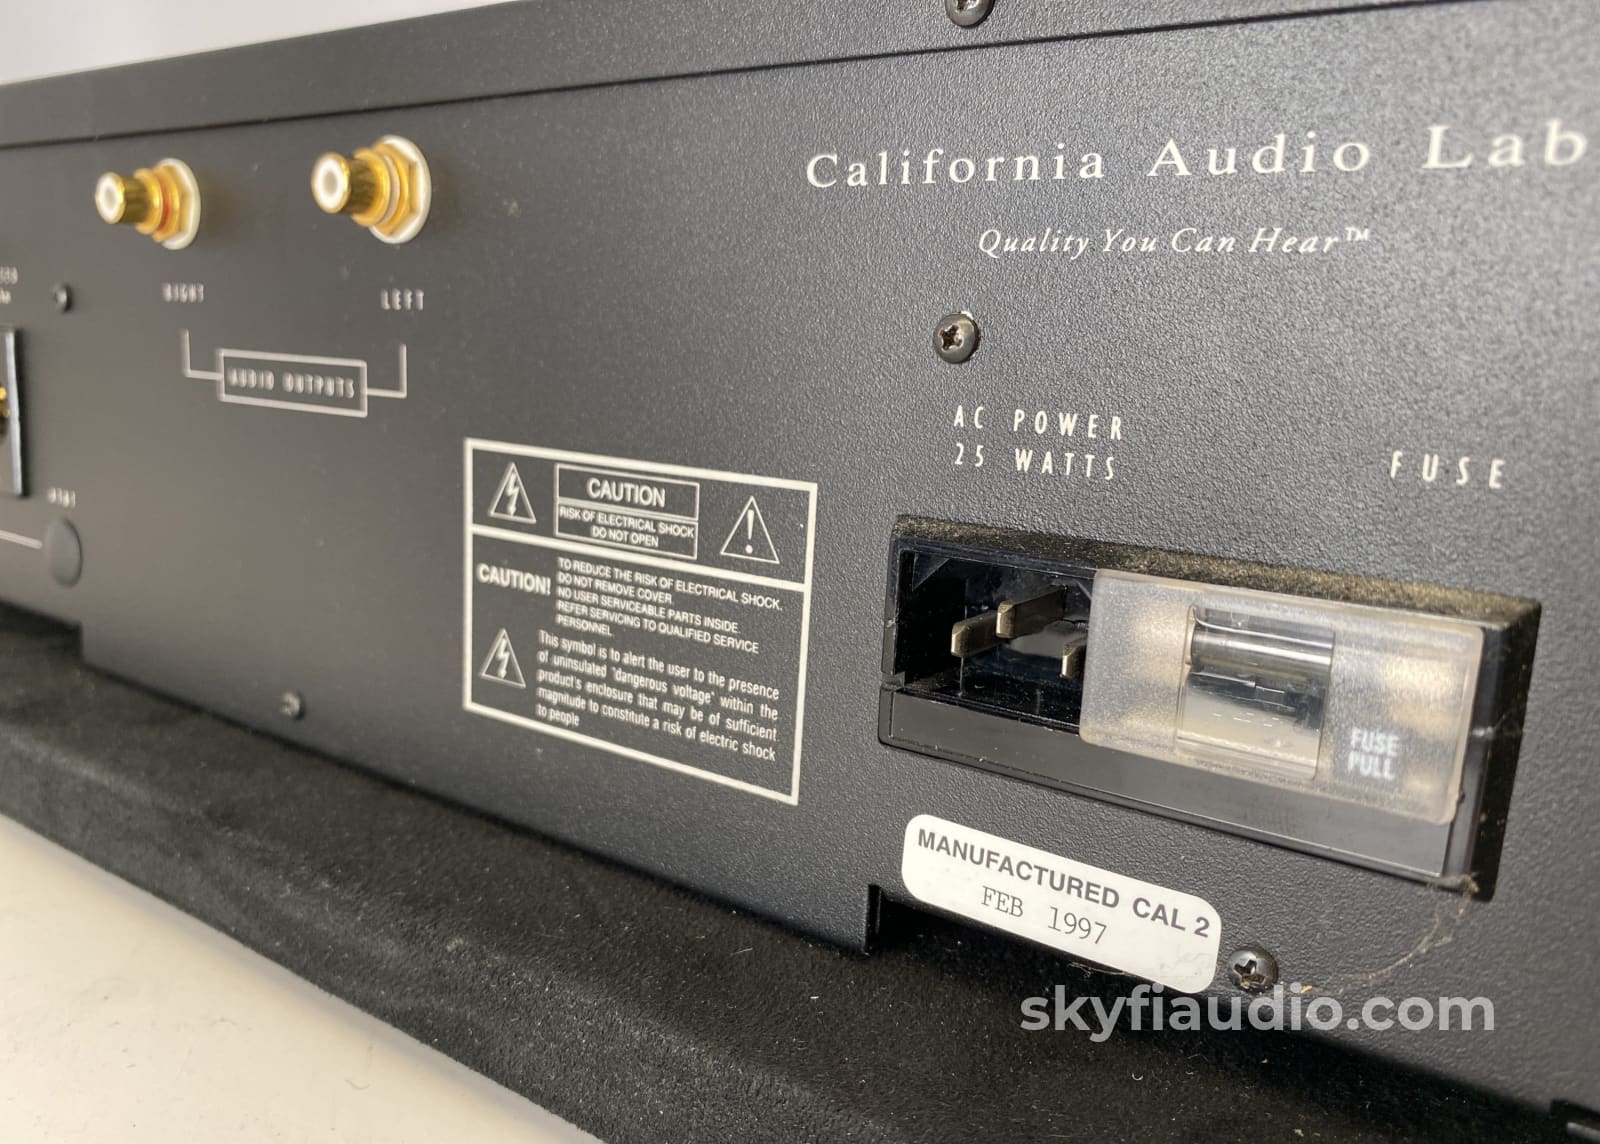 Cal (California Audio Labs) Cl-10 Cd Changer 20-Bit + Hdcd Capable Digital